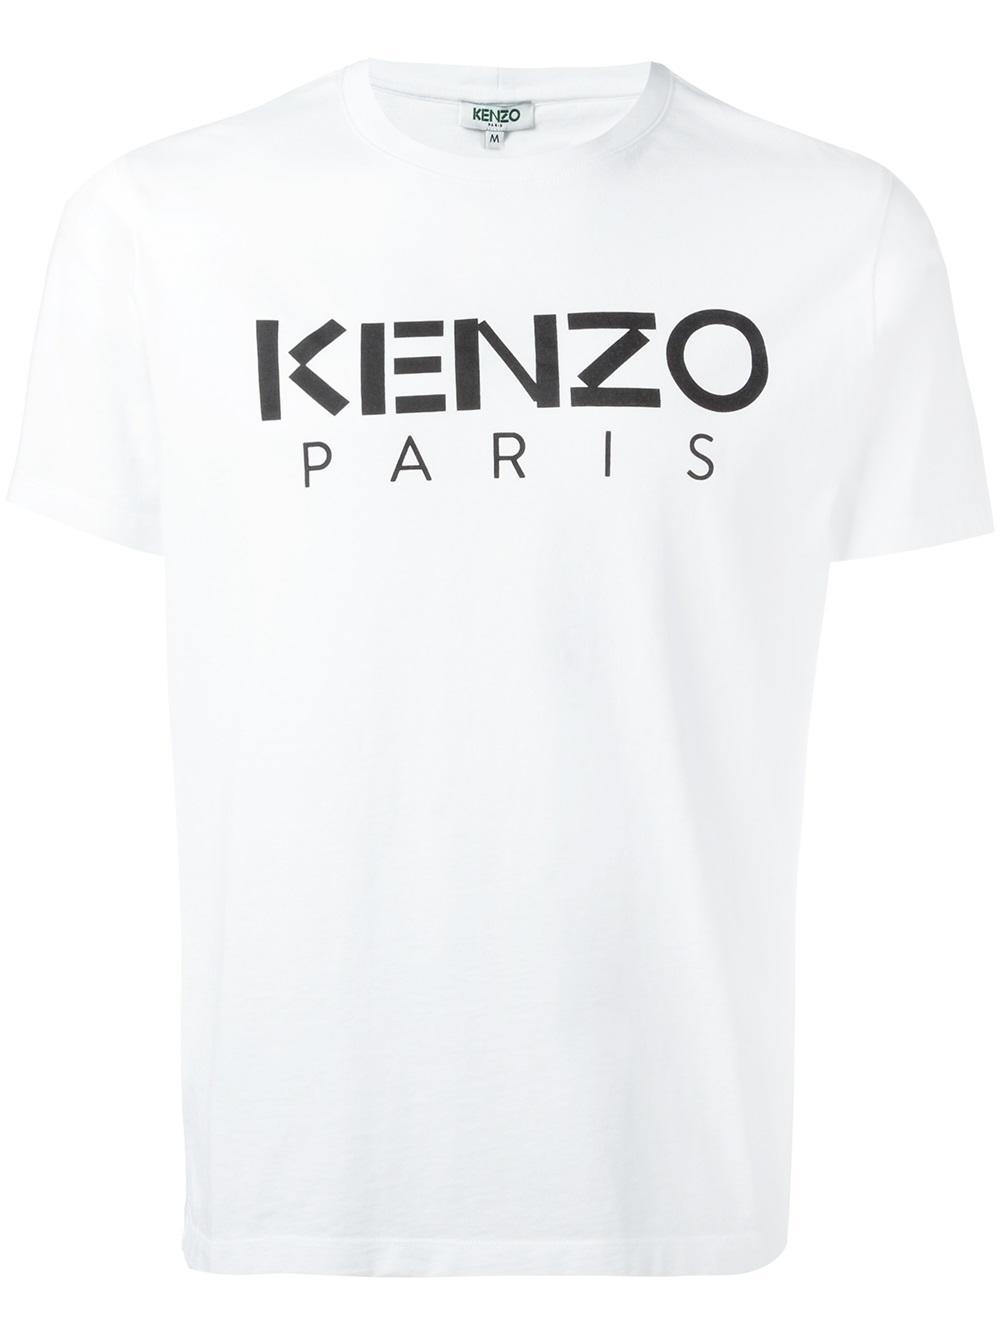 Kenzo Paris T-shirt in White for Men | Lyst